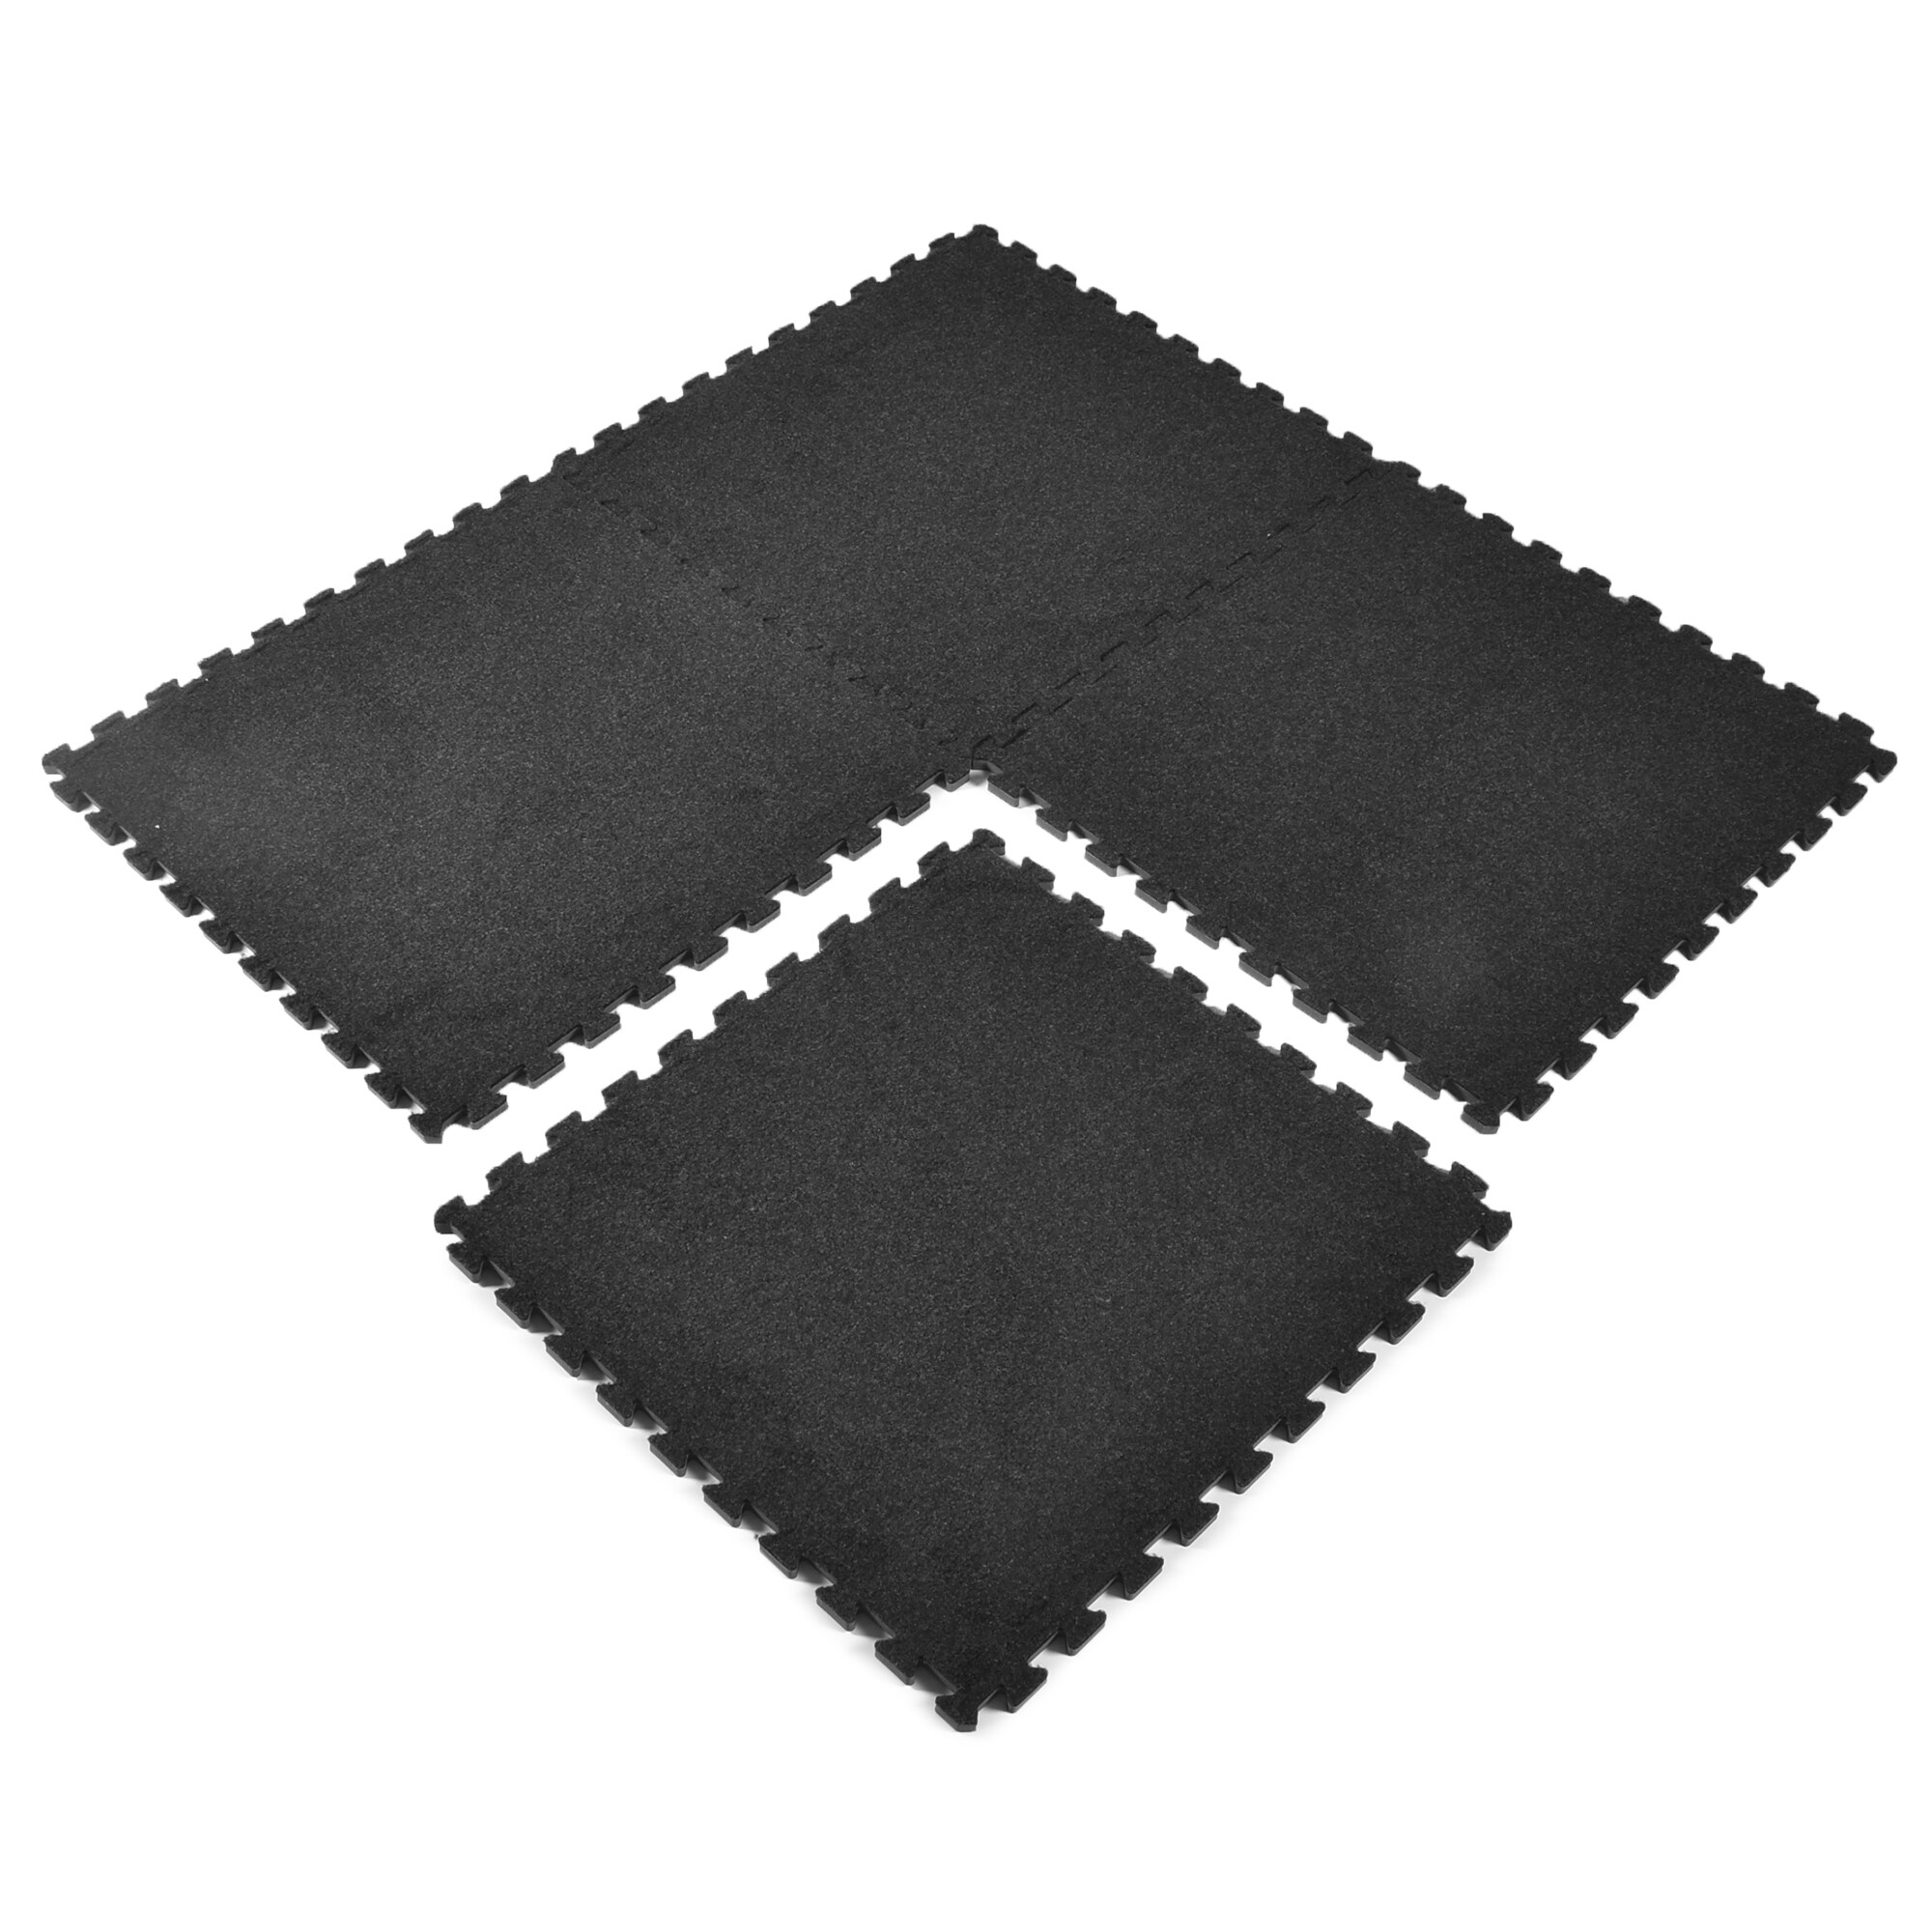 Rubber Flooring Roll Greatmats 1/4 Inch Black 10 LF